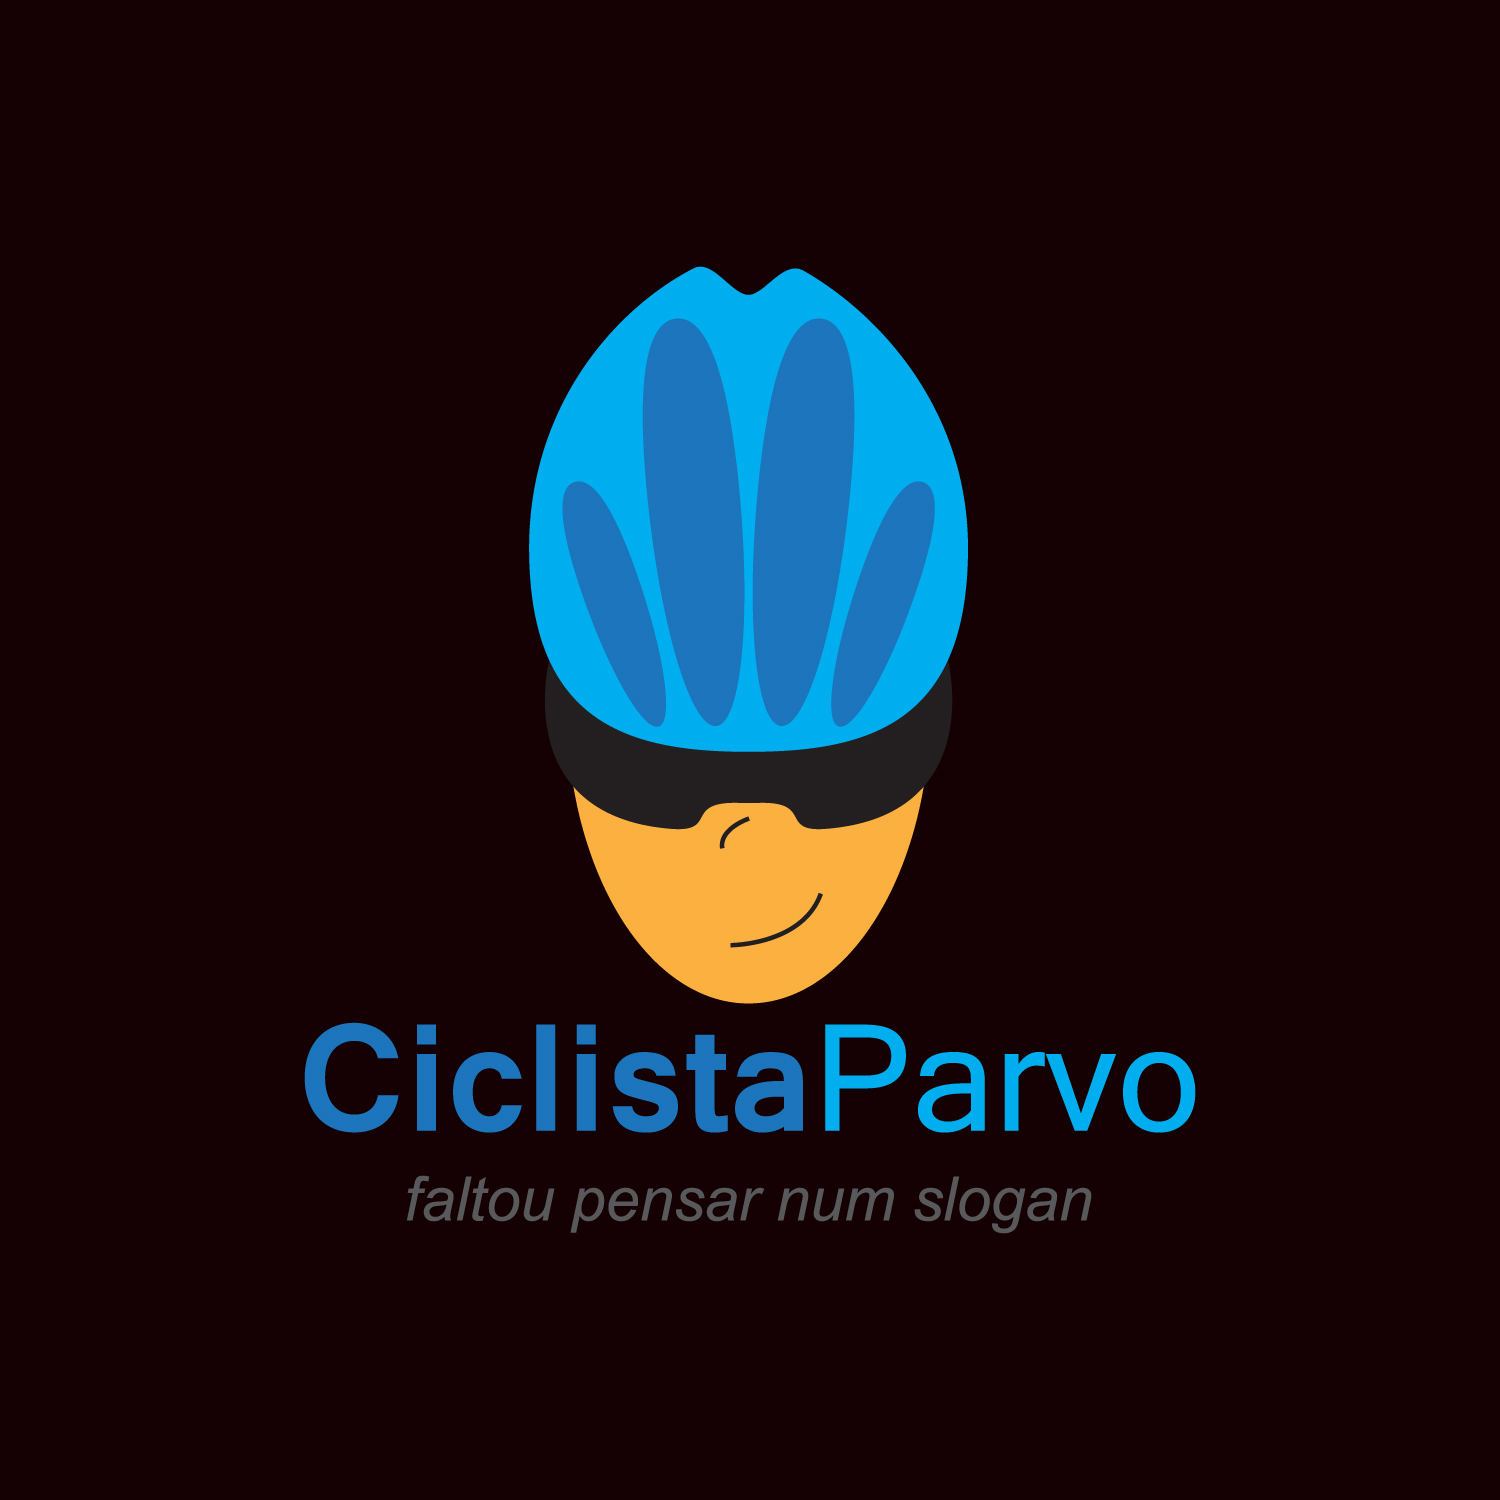 CiclistaParvo